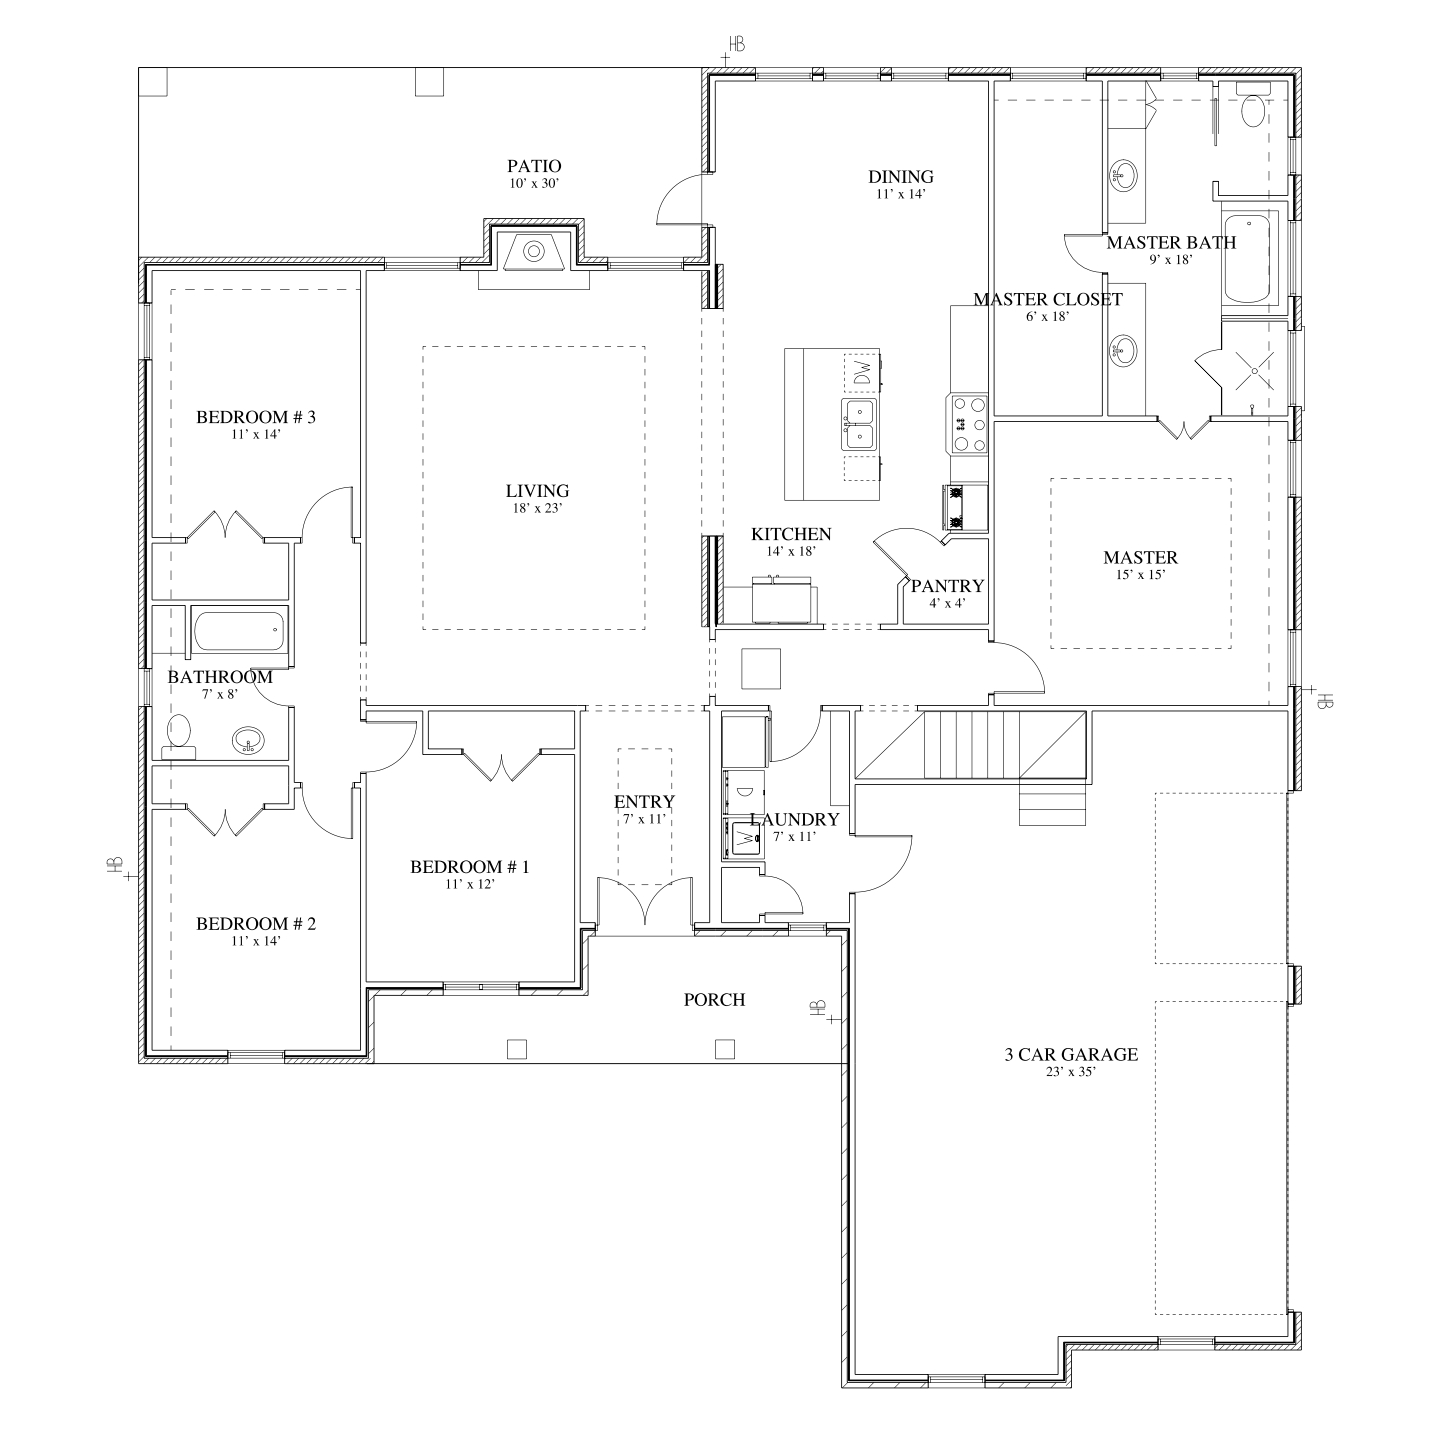 The White Floor Plan of house